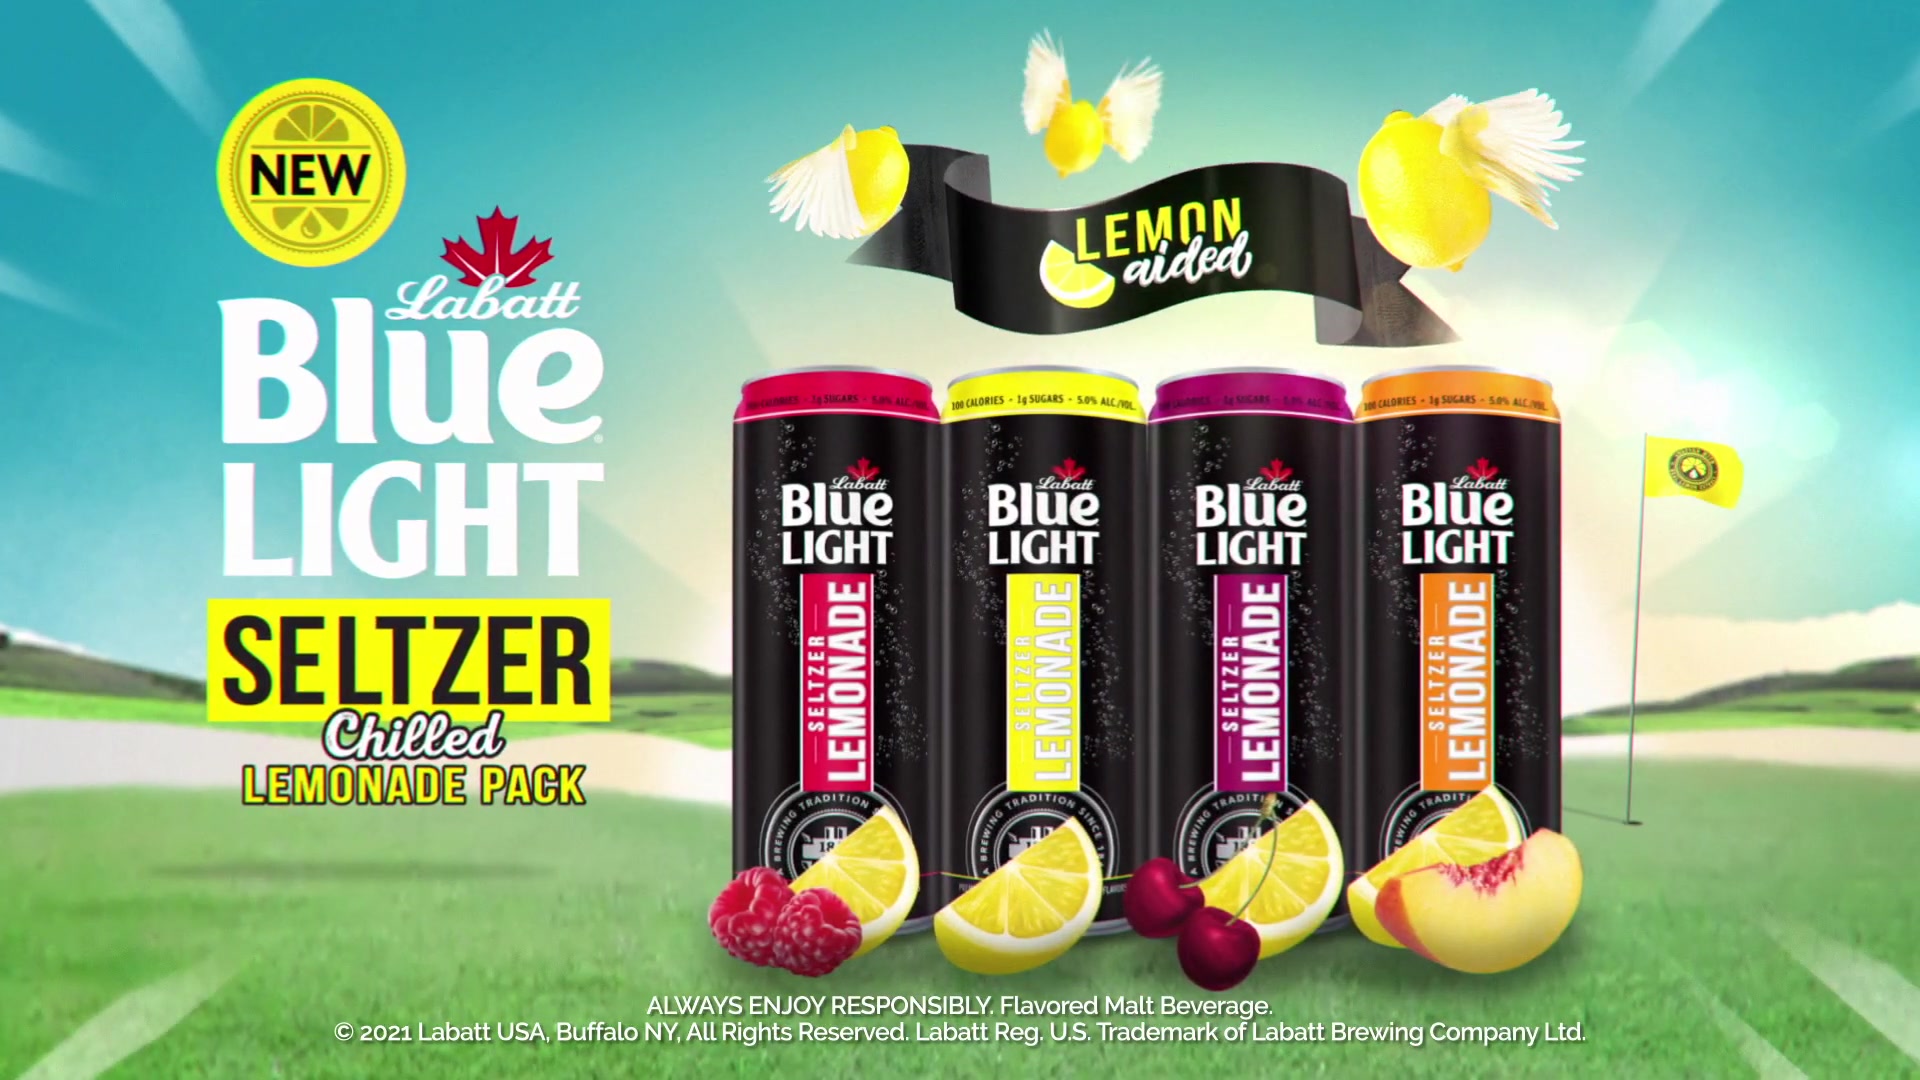 hard-seltzer-gets-lemon-aided-in-labatt-blue-light-campaign-ad-ruby